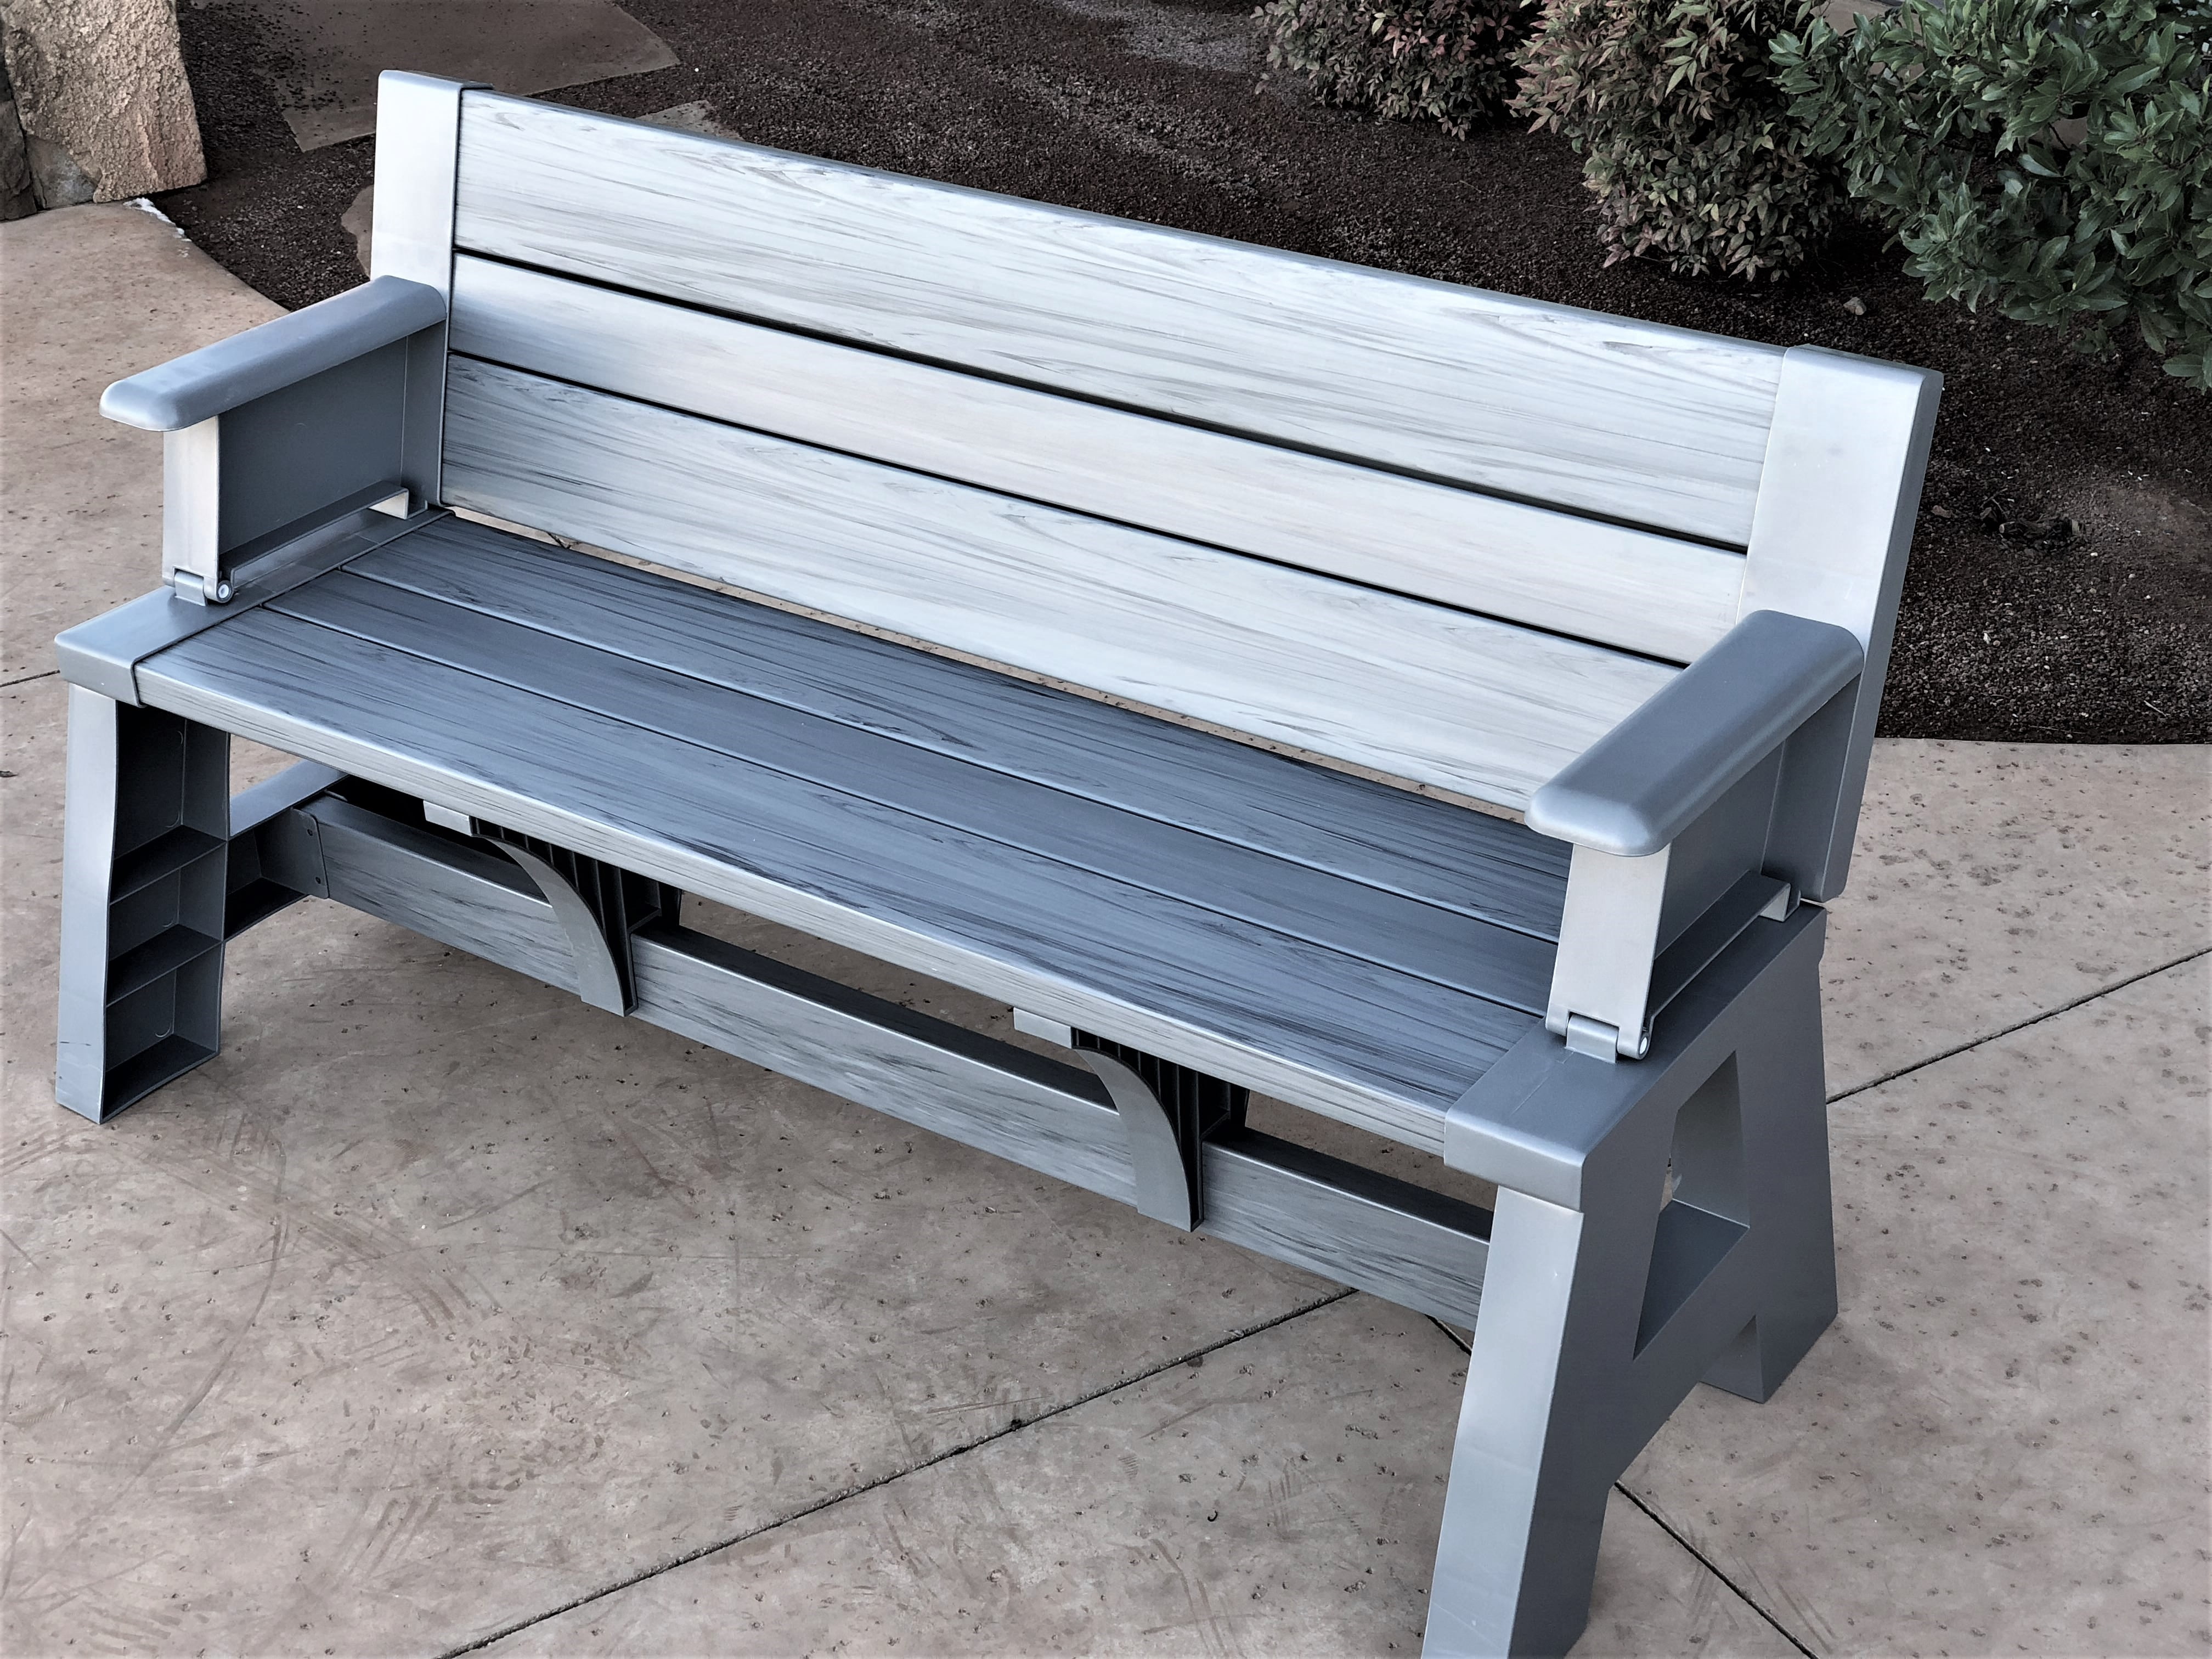 Convert-A-Bench Folding Picnic Table Bench, Platinum Gray - Walmart.com